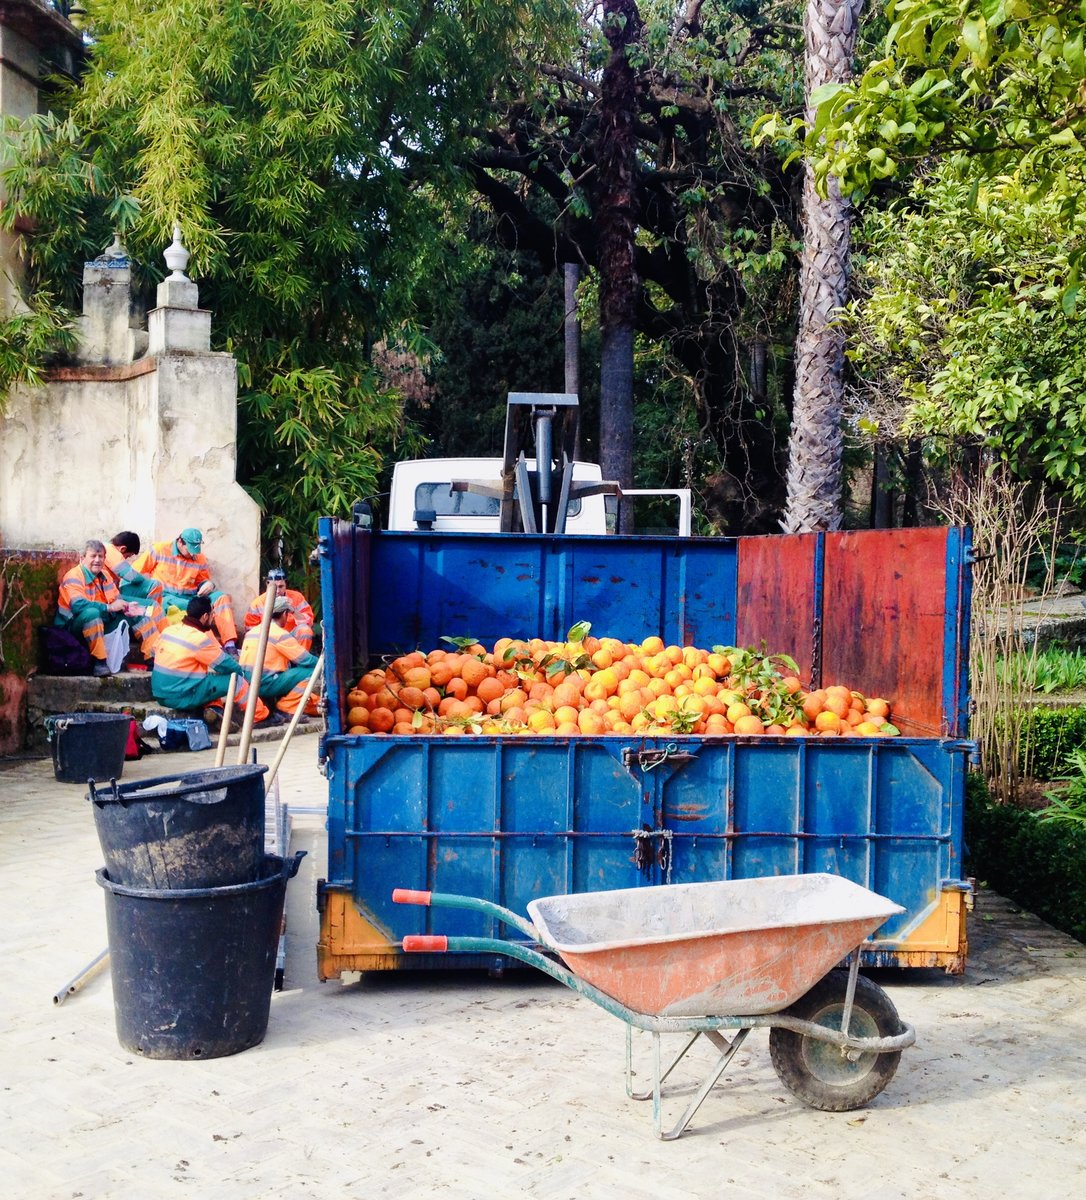 Harvest of bitter oranges en the Alcazar gardens of Seville